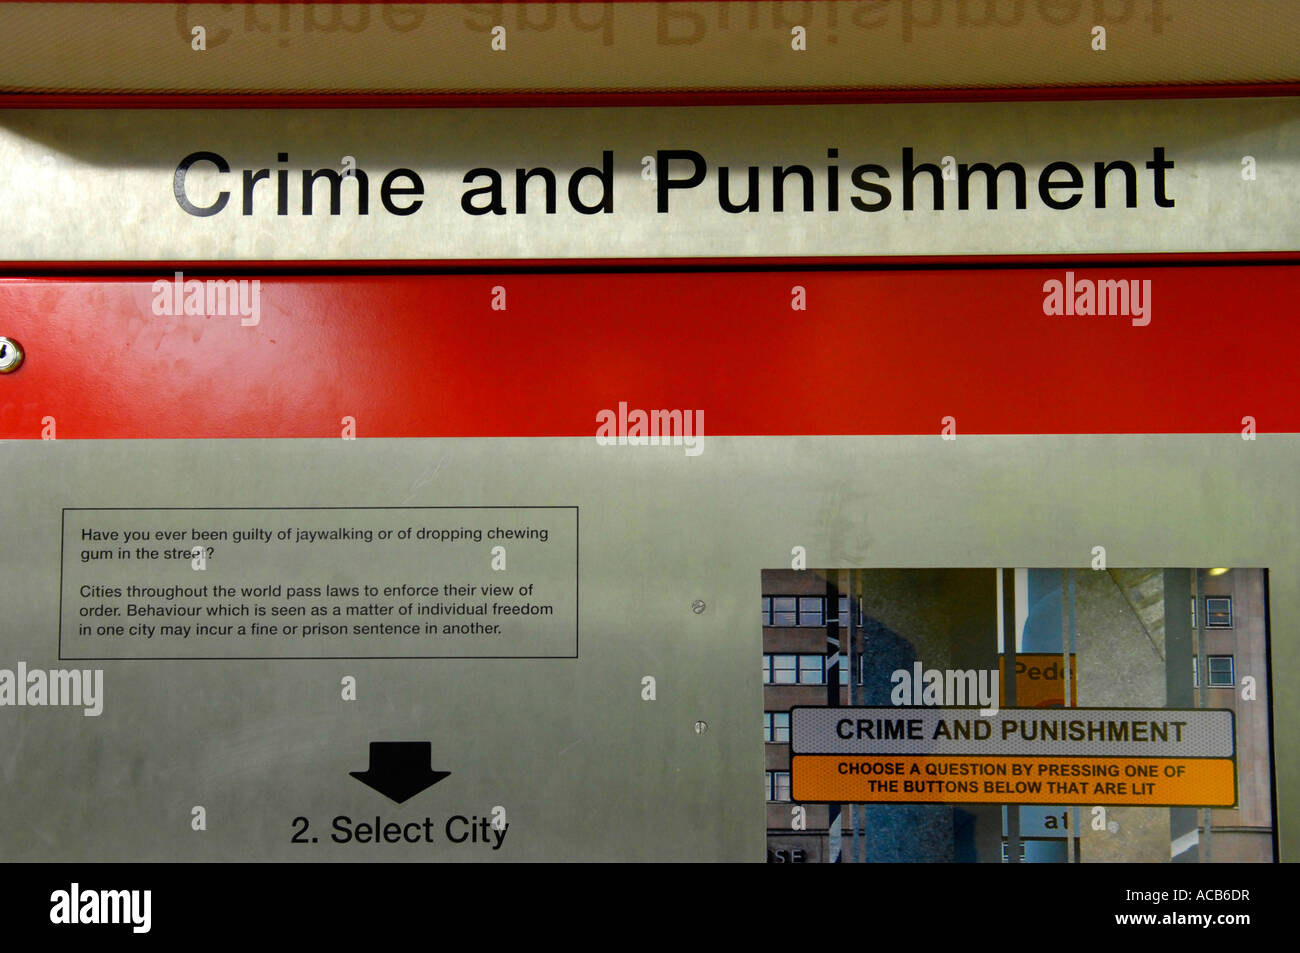 crime and punishment Stock Photo